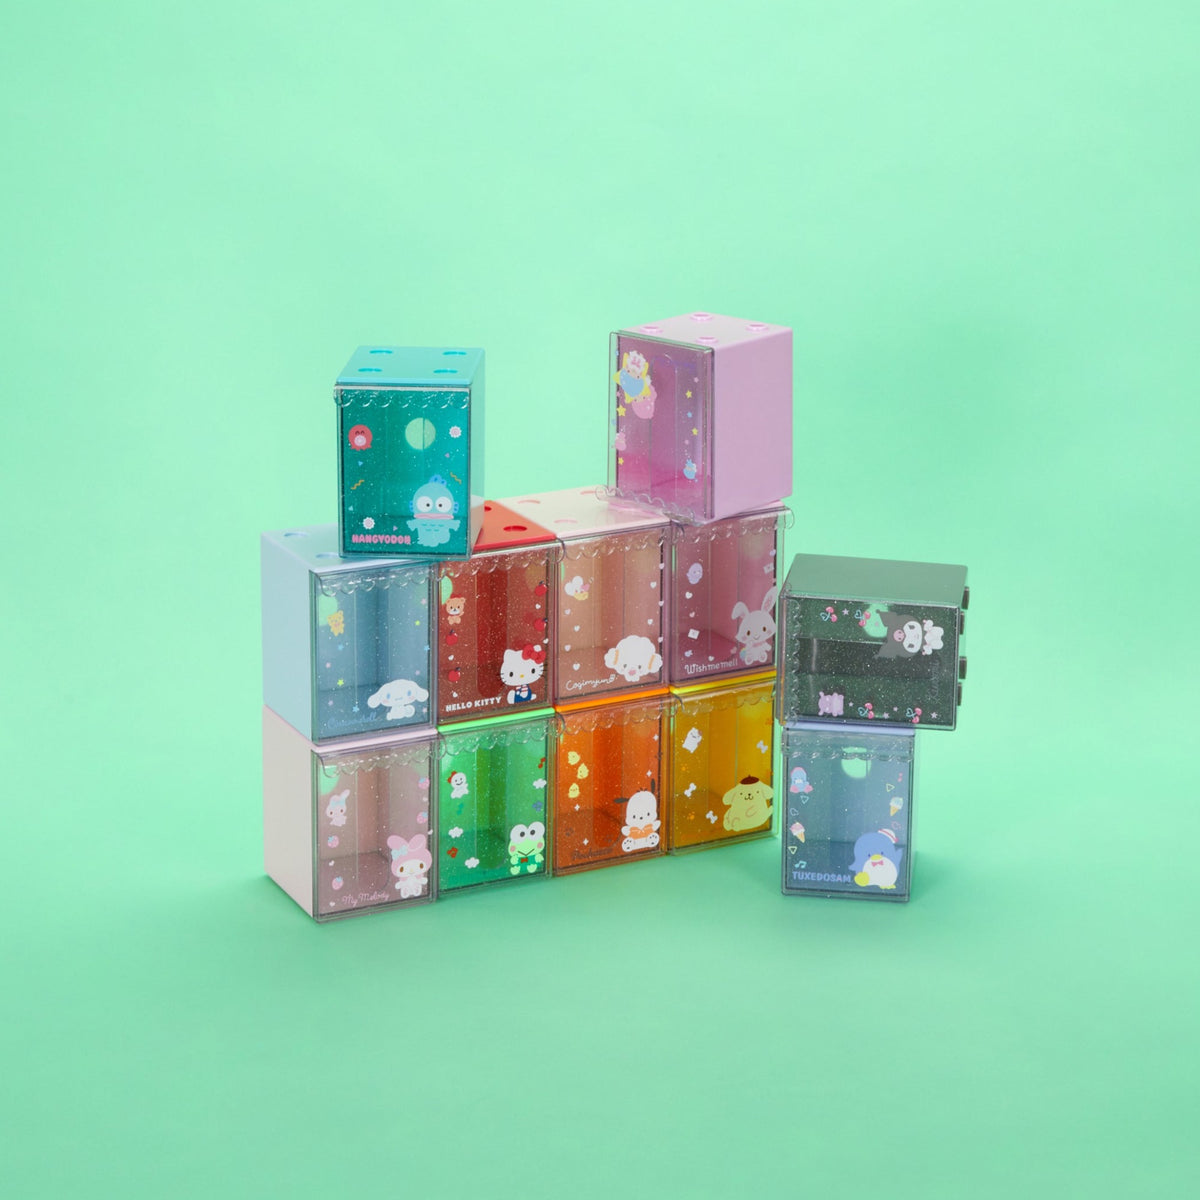 ARTBOX - Add a cute Sanrio Storage Bin to your room or